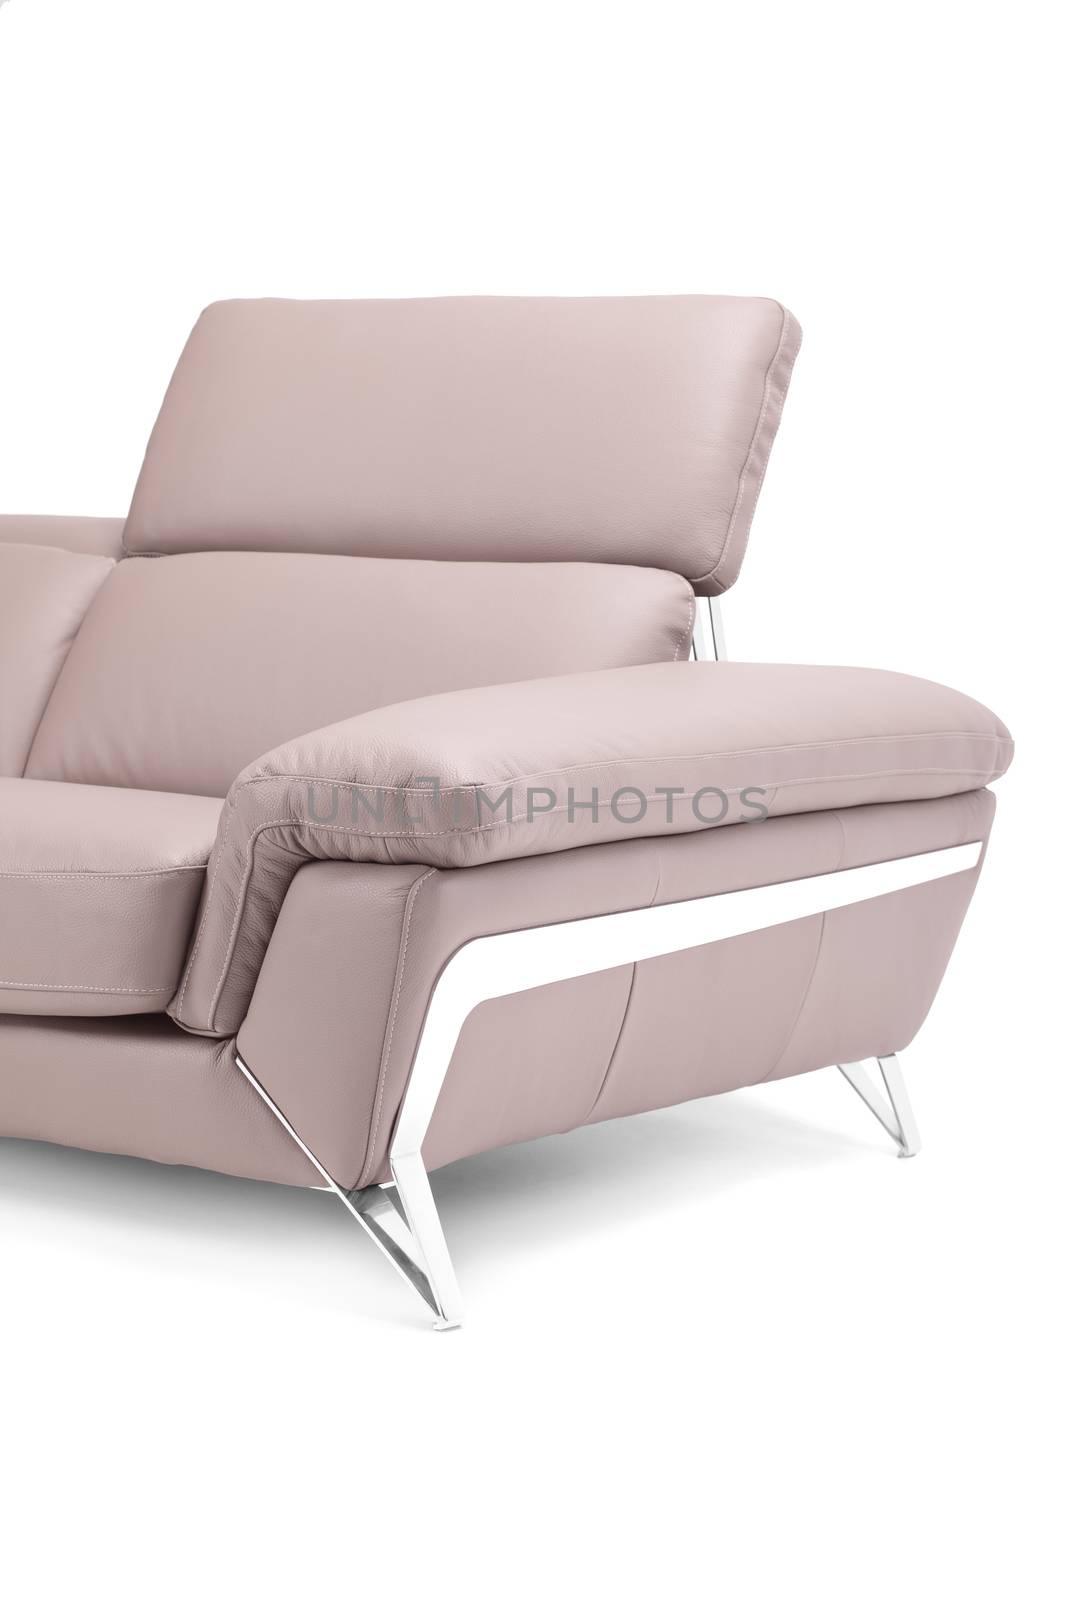 modern leather sofa by kokimk